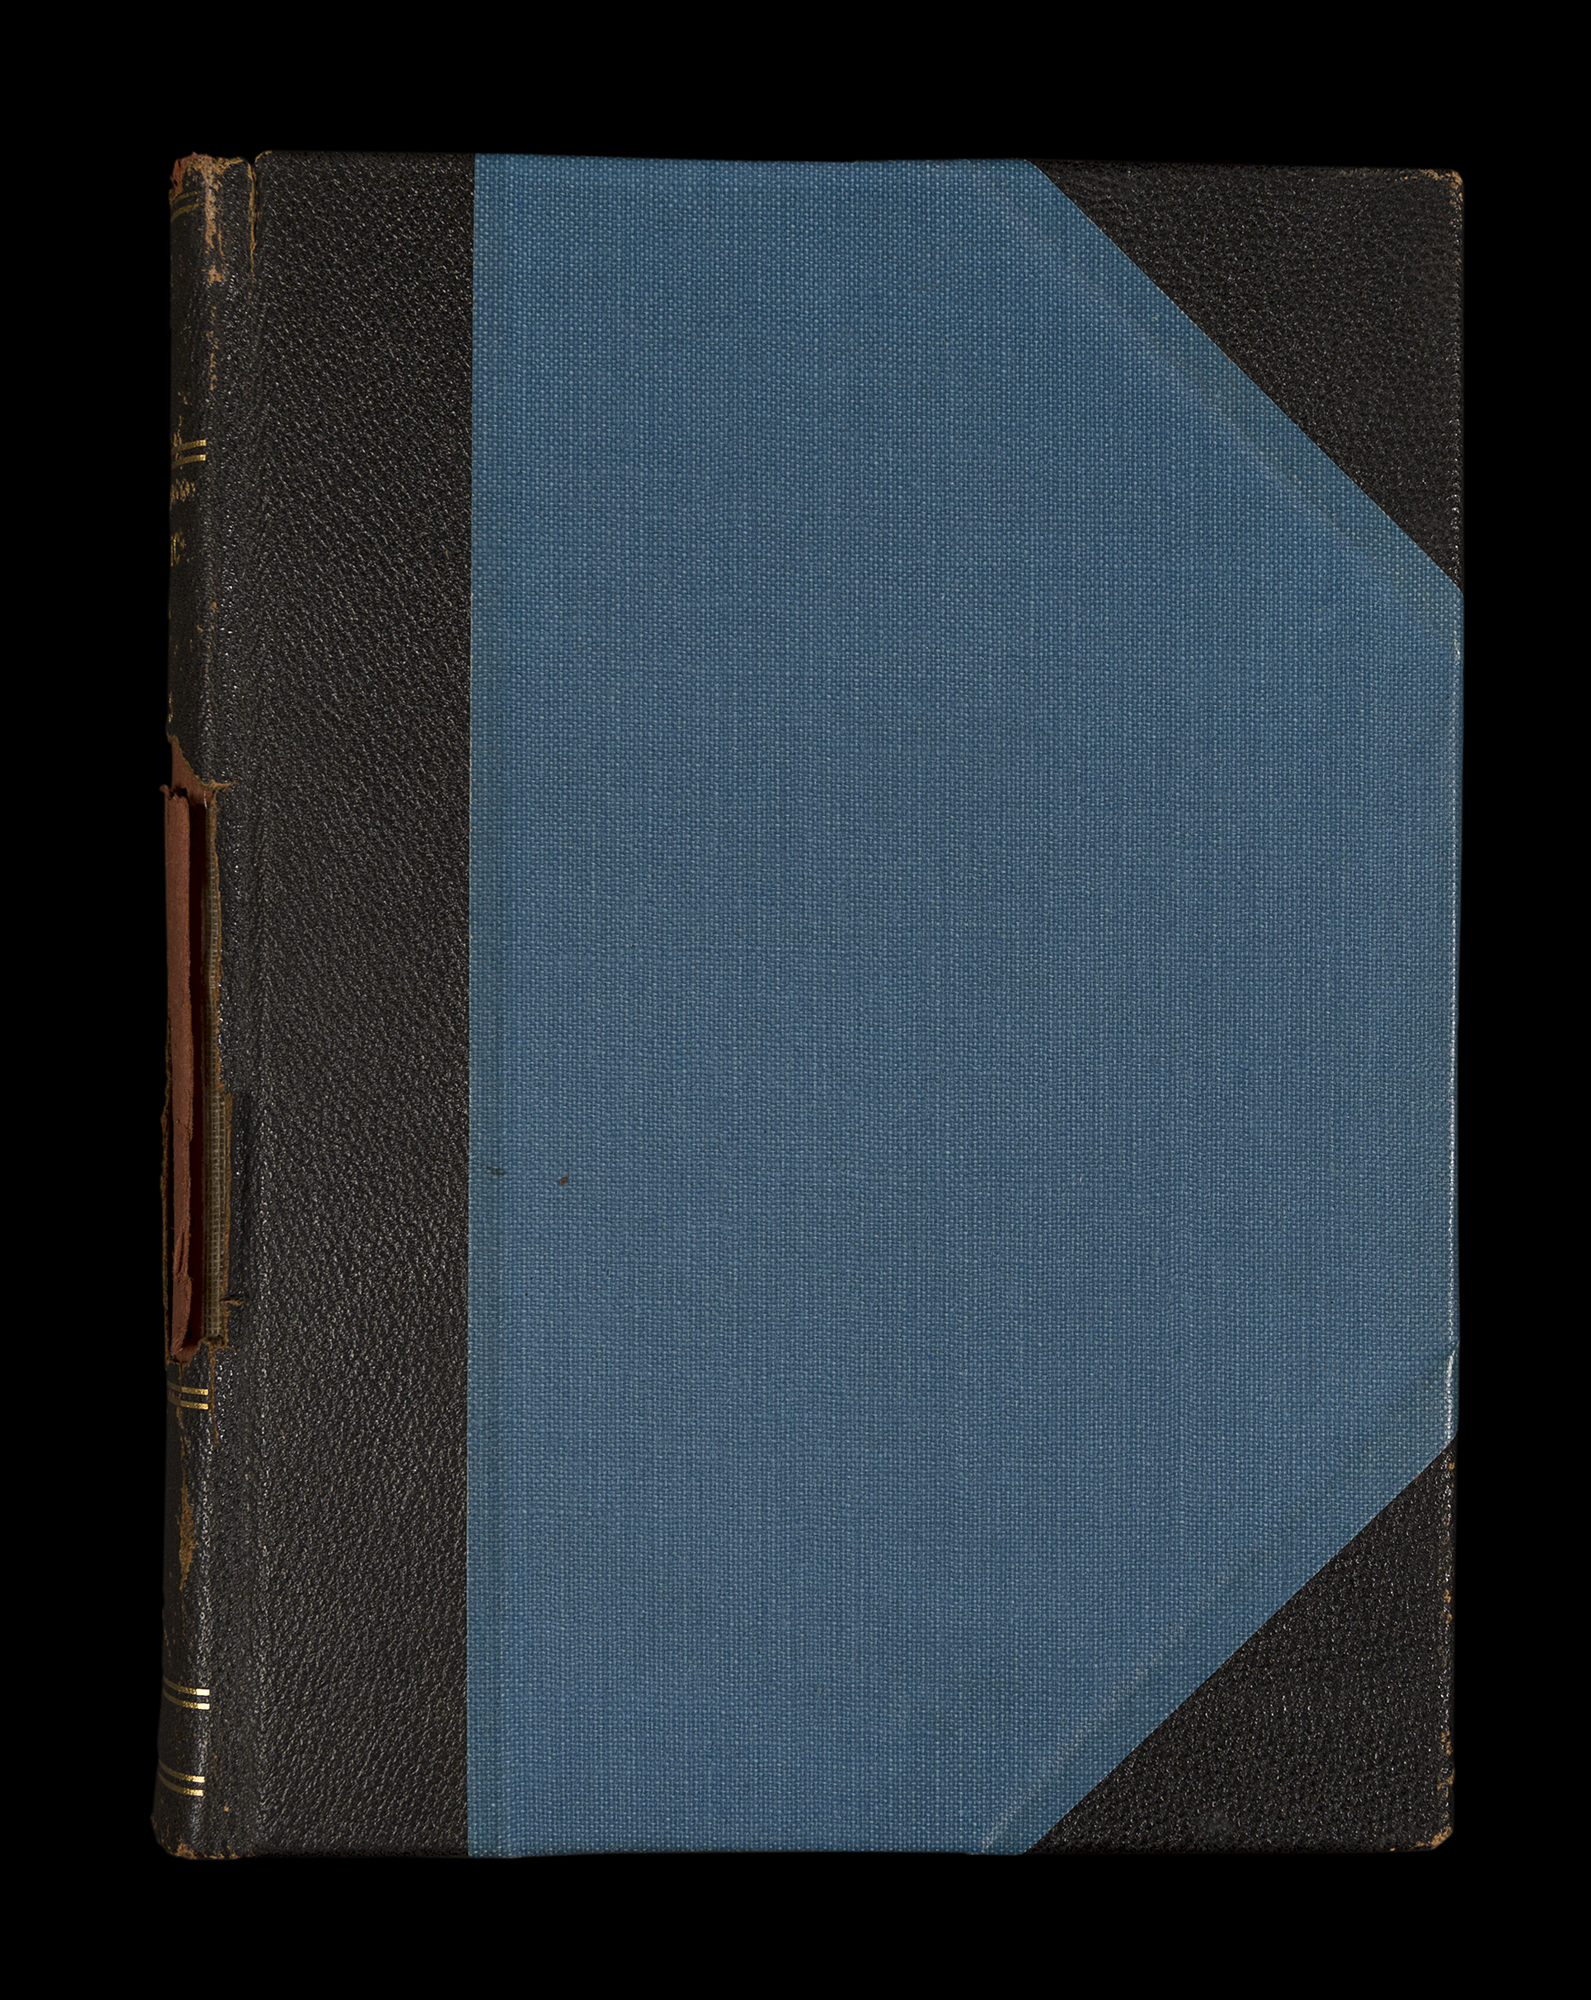 LAPO_ProgramBook_Cover_1924-1925.jpg